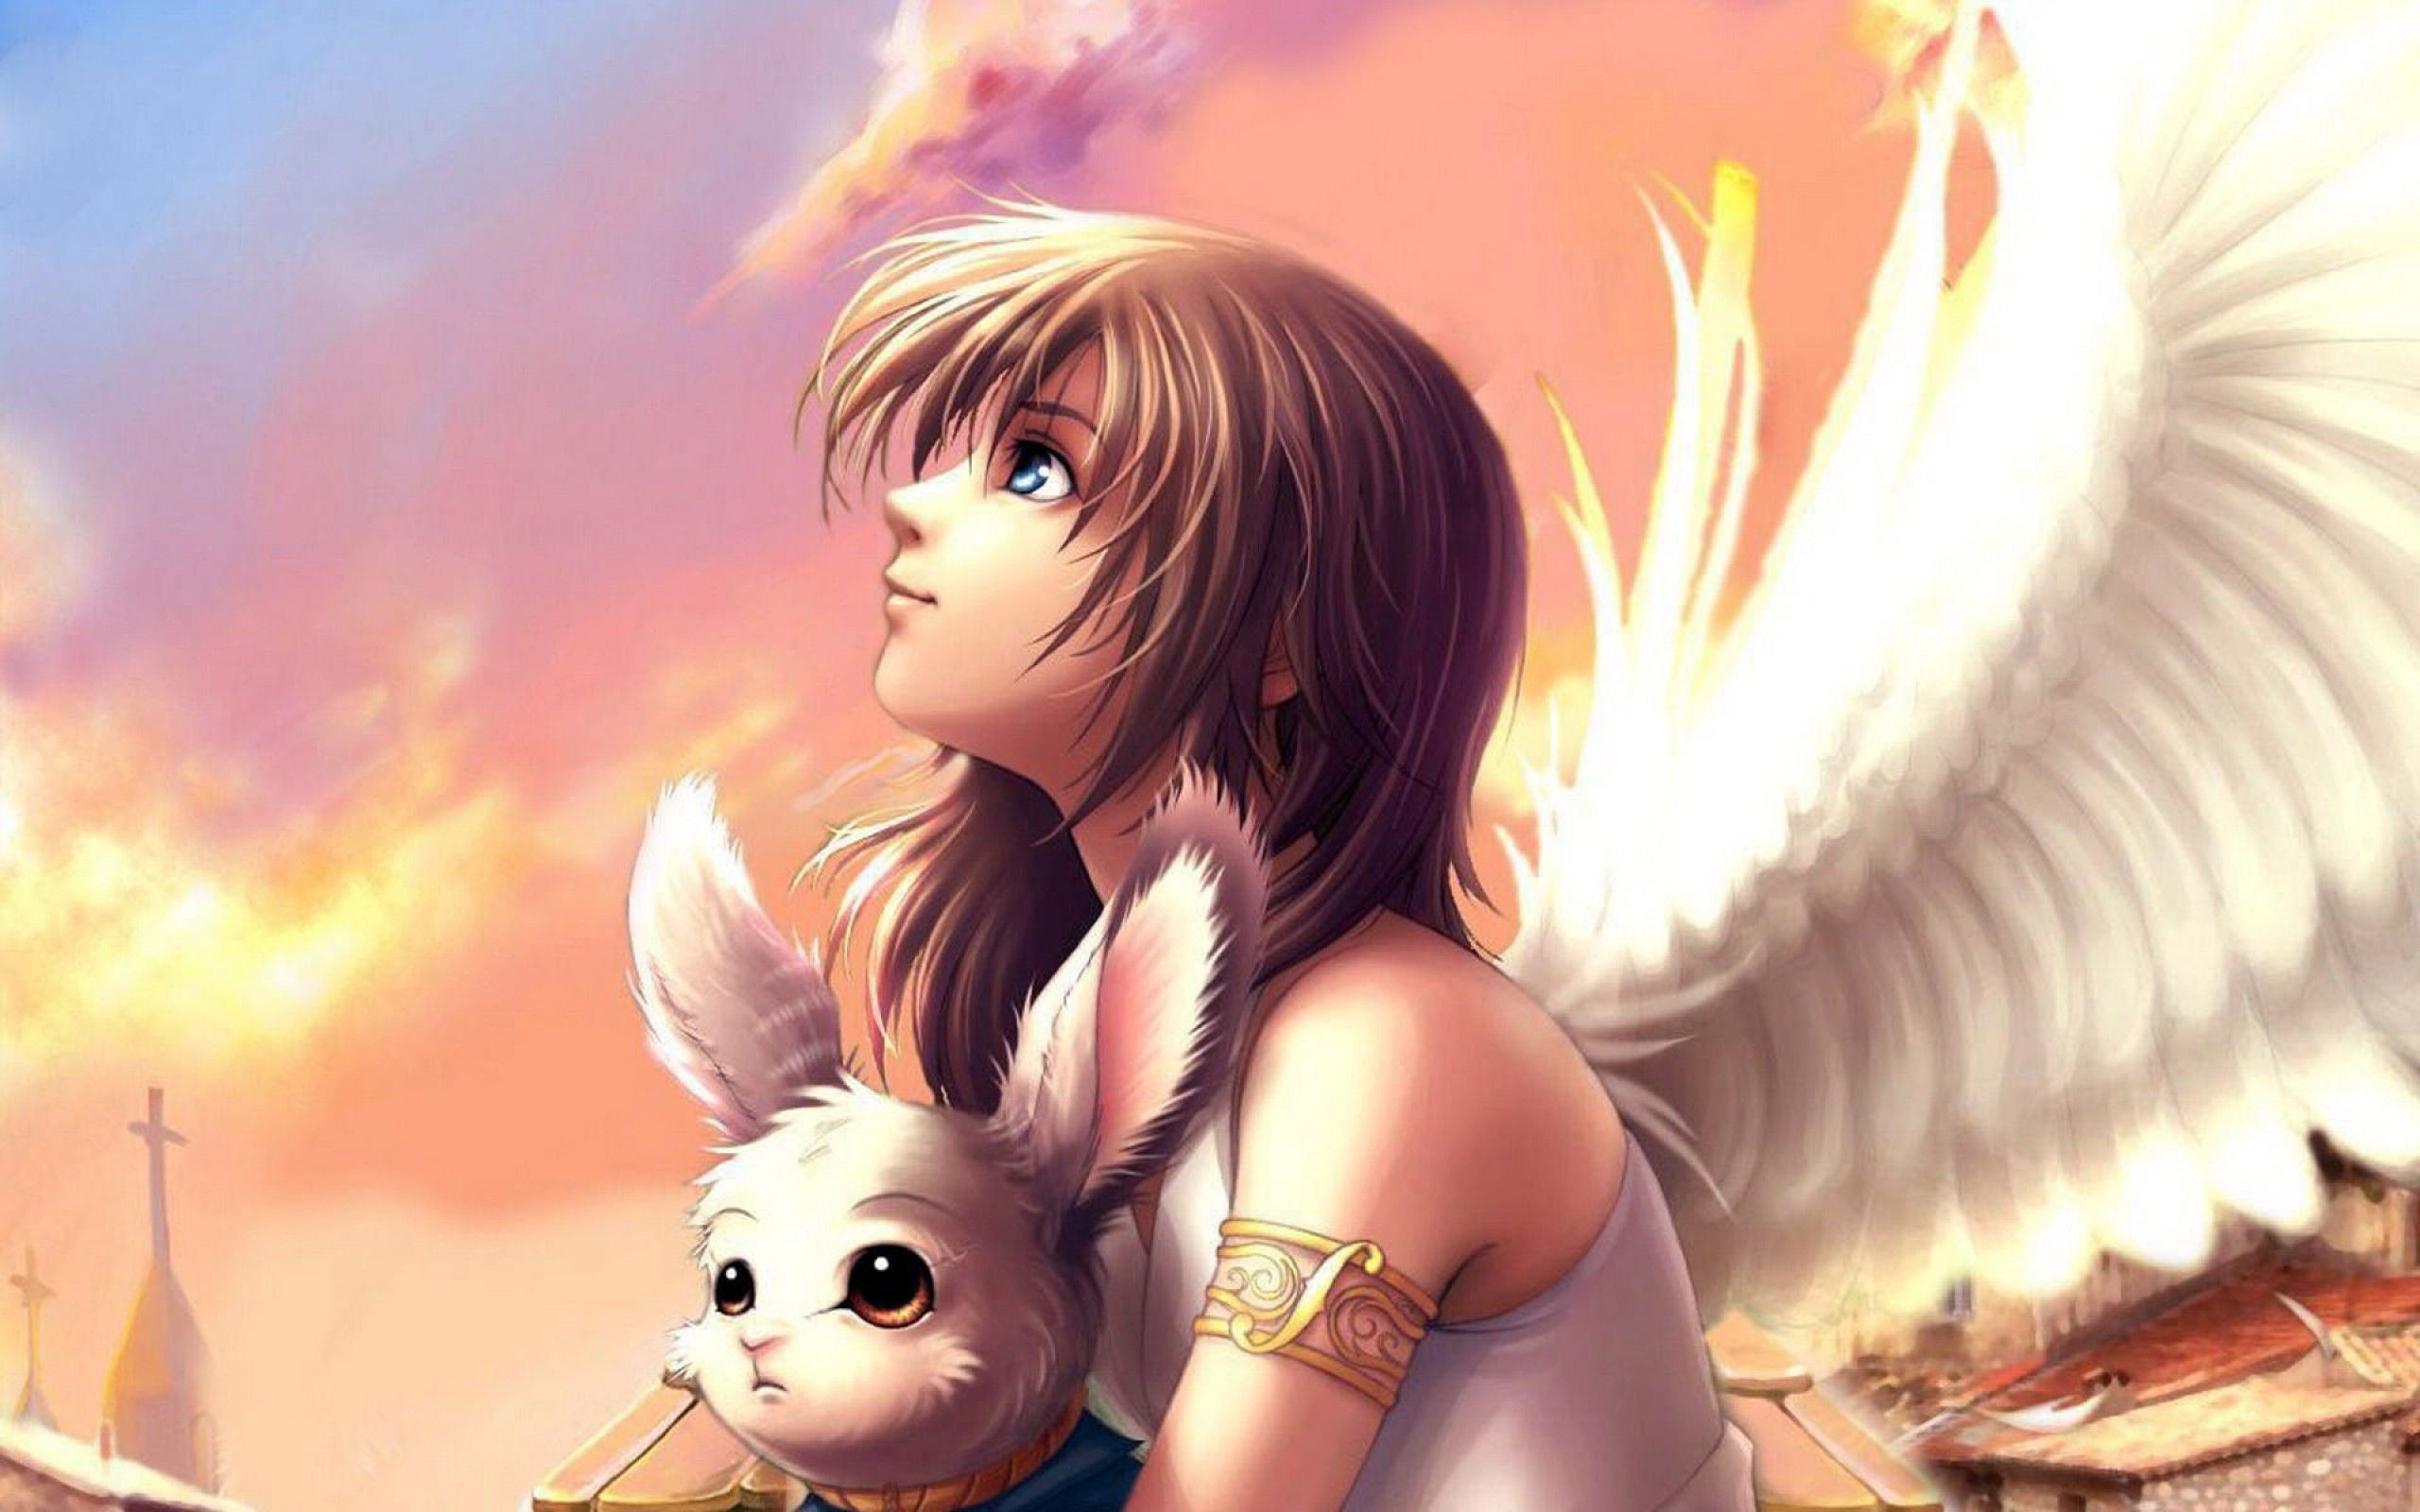 Anime Angel Wallpaper Desktop Background. Anime background